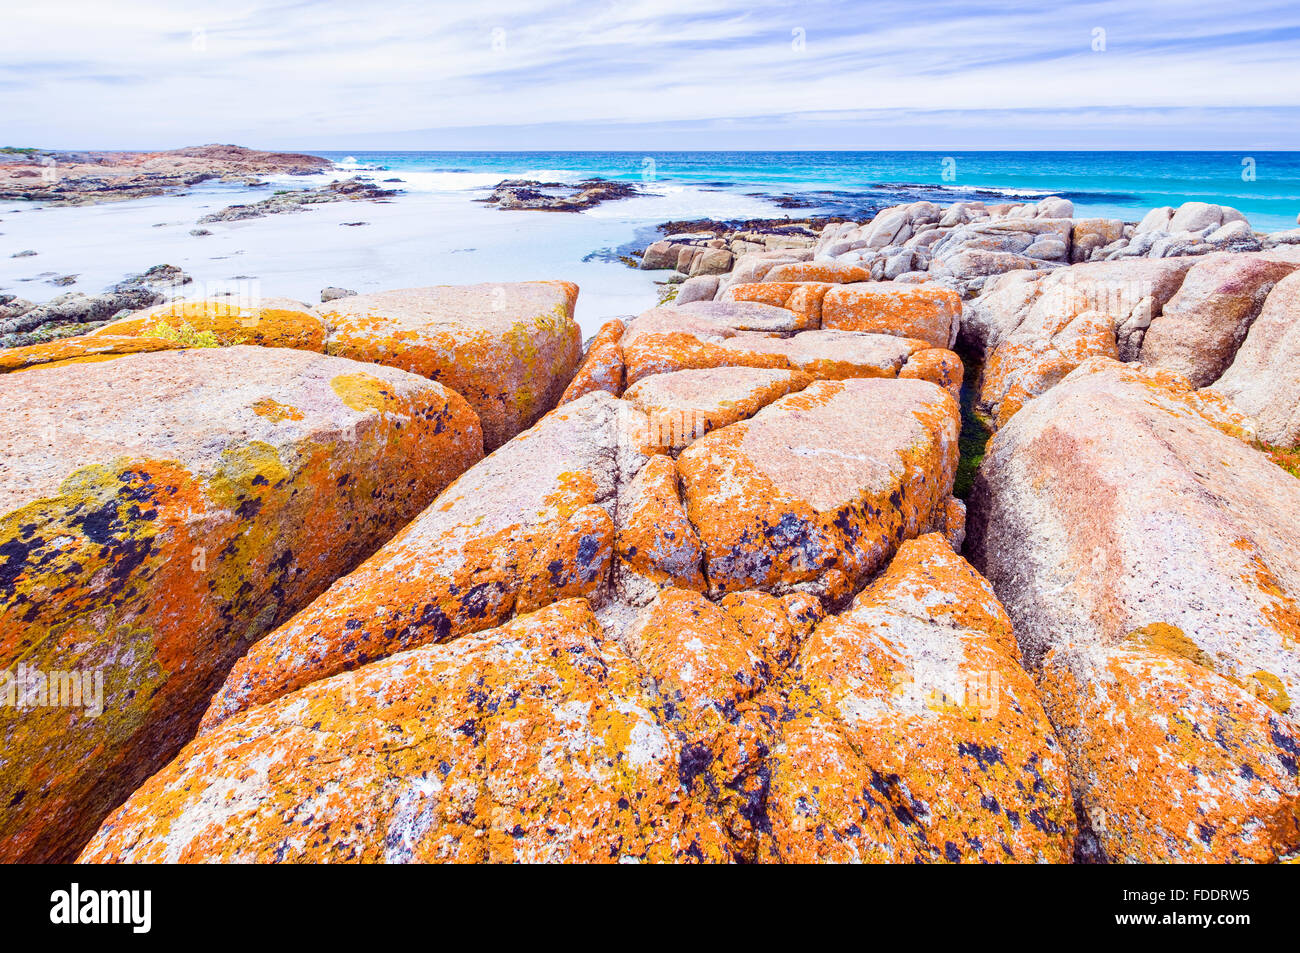 The Friendly Beaches in Freycinet Peninsula,Tasmania showing orange lichen-covered rocks Stock Photo